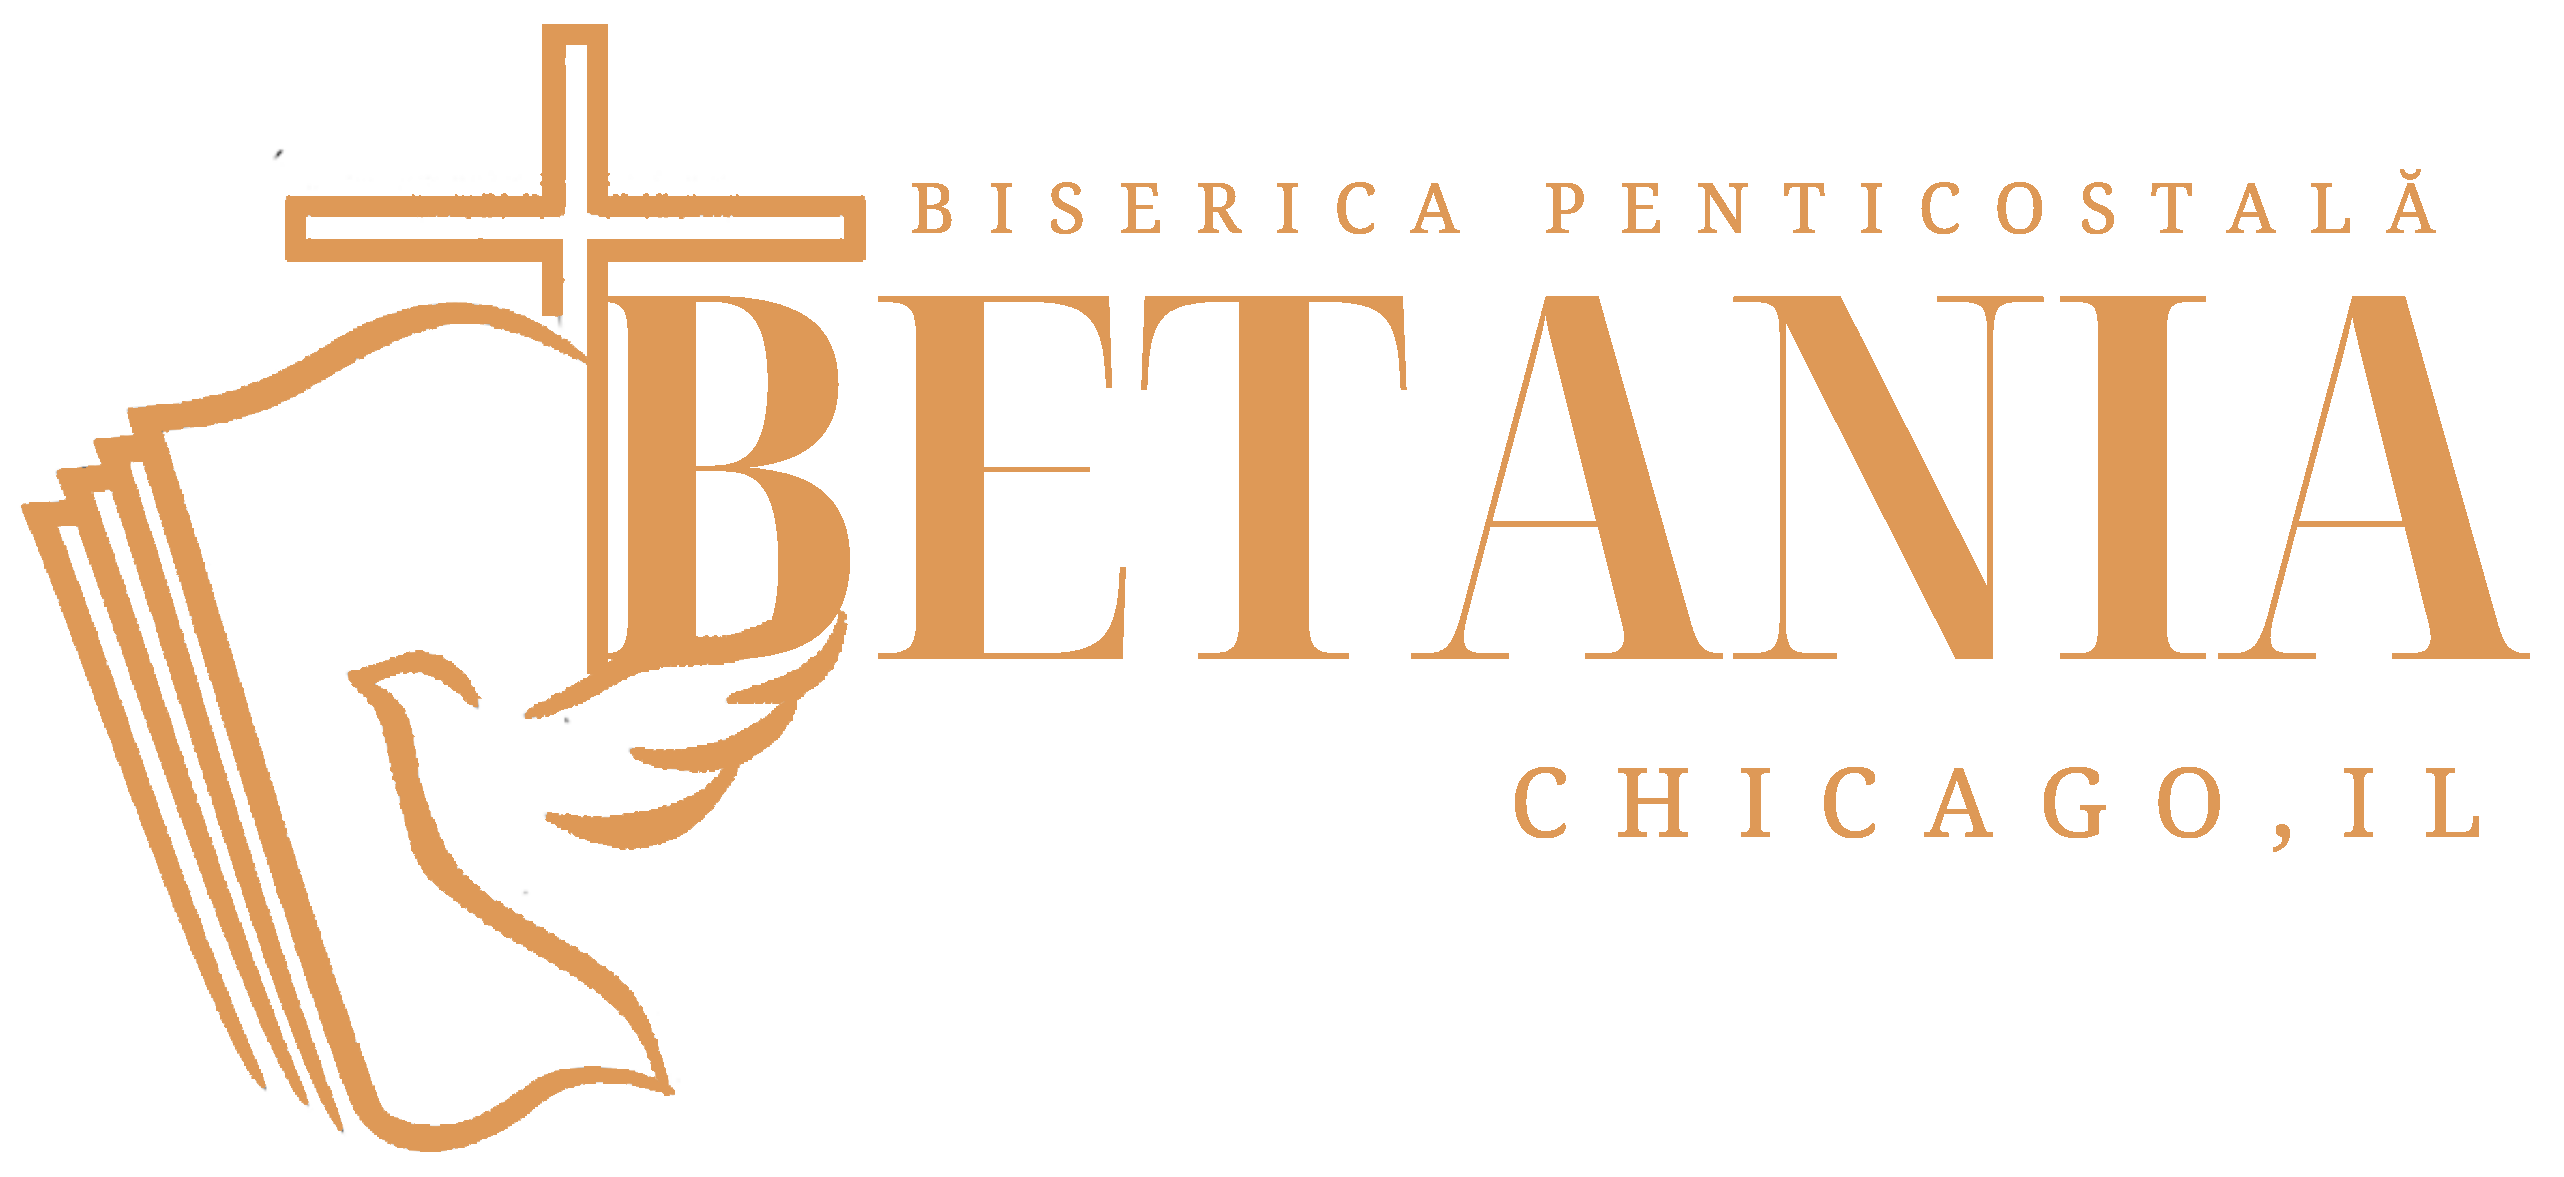 BISERICA BETANIA CHICAGO